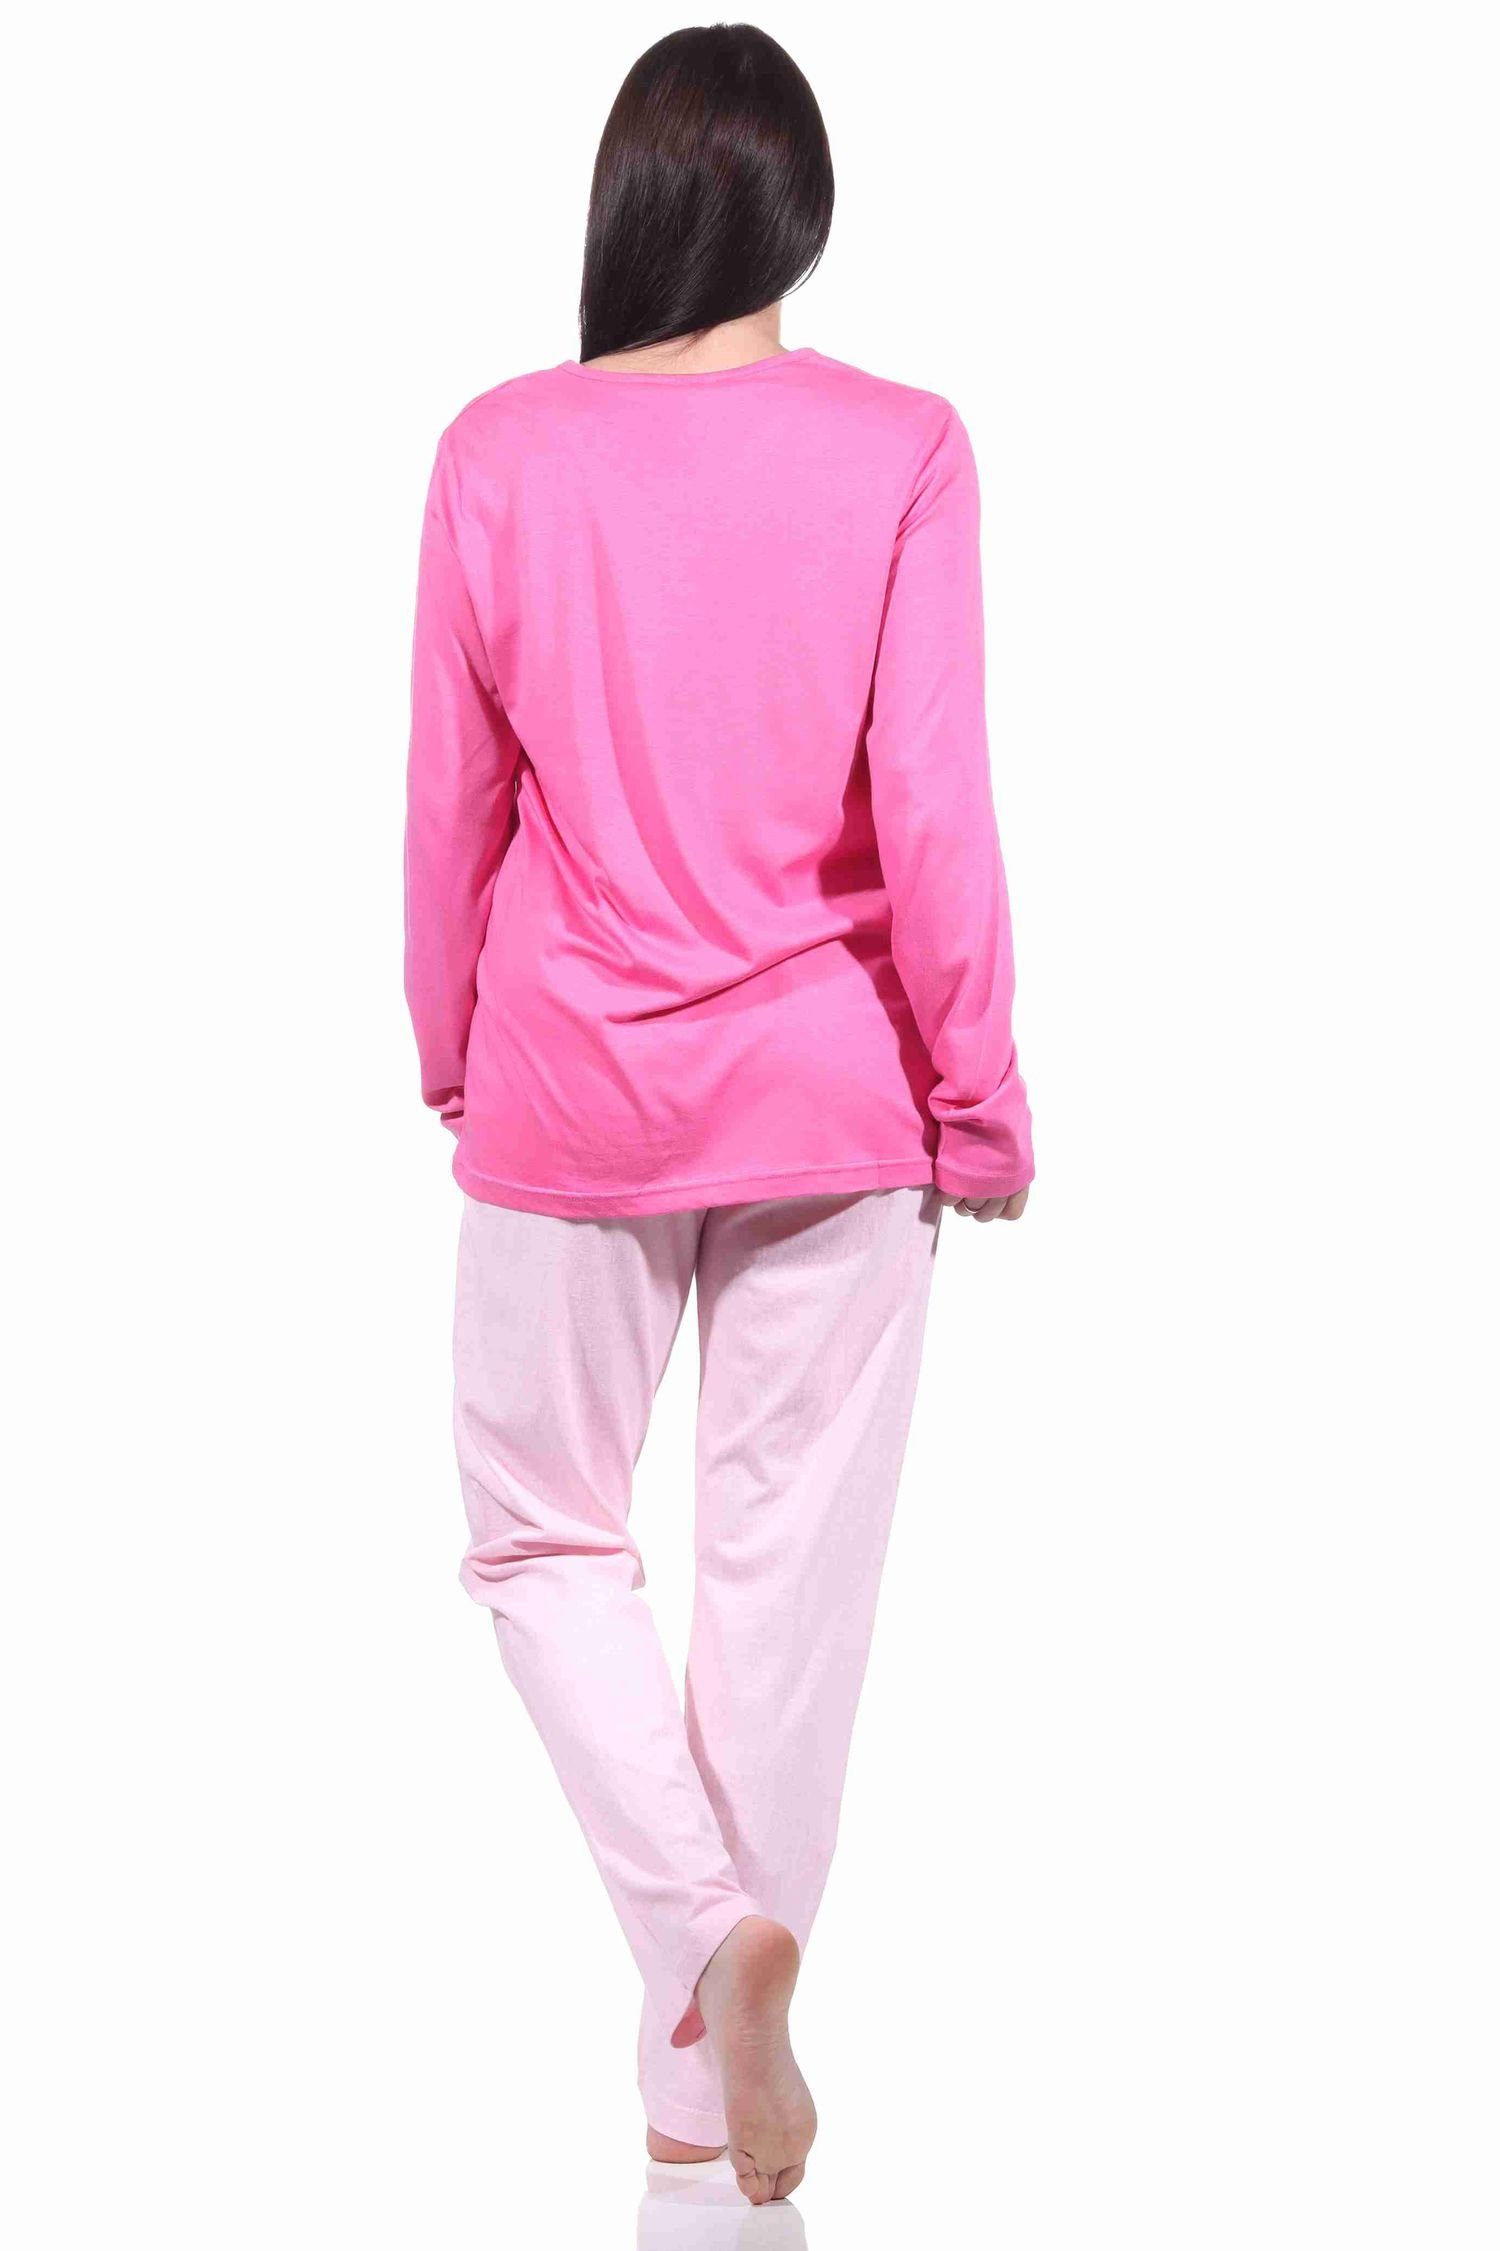 by - 212 Pyjama Normann Herzmotiv 904 10 Pyjama mit langarm Schlafanzug pink RELAX Damen